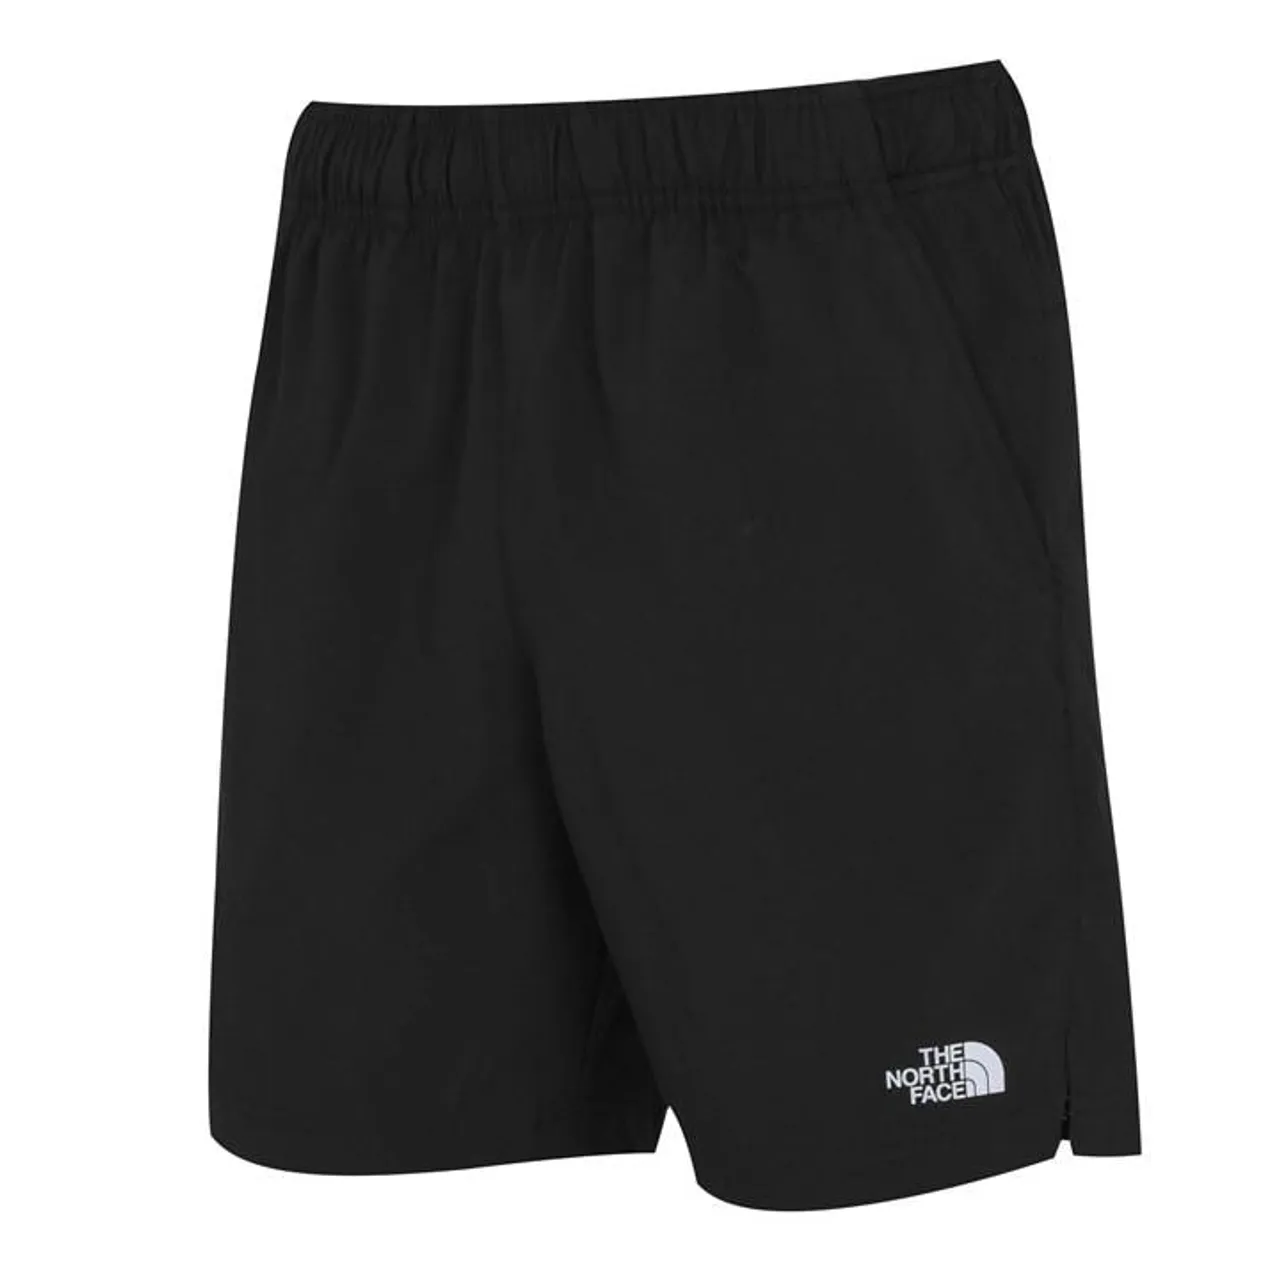 The North Face Men’s 24/7 Shorts - Black